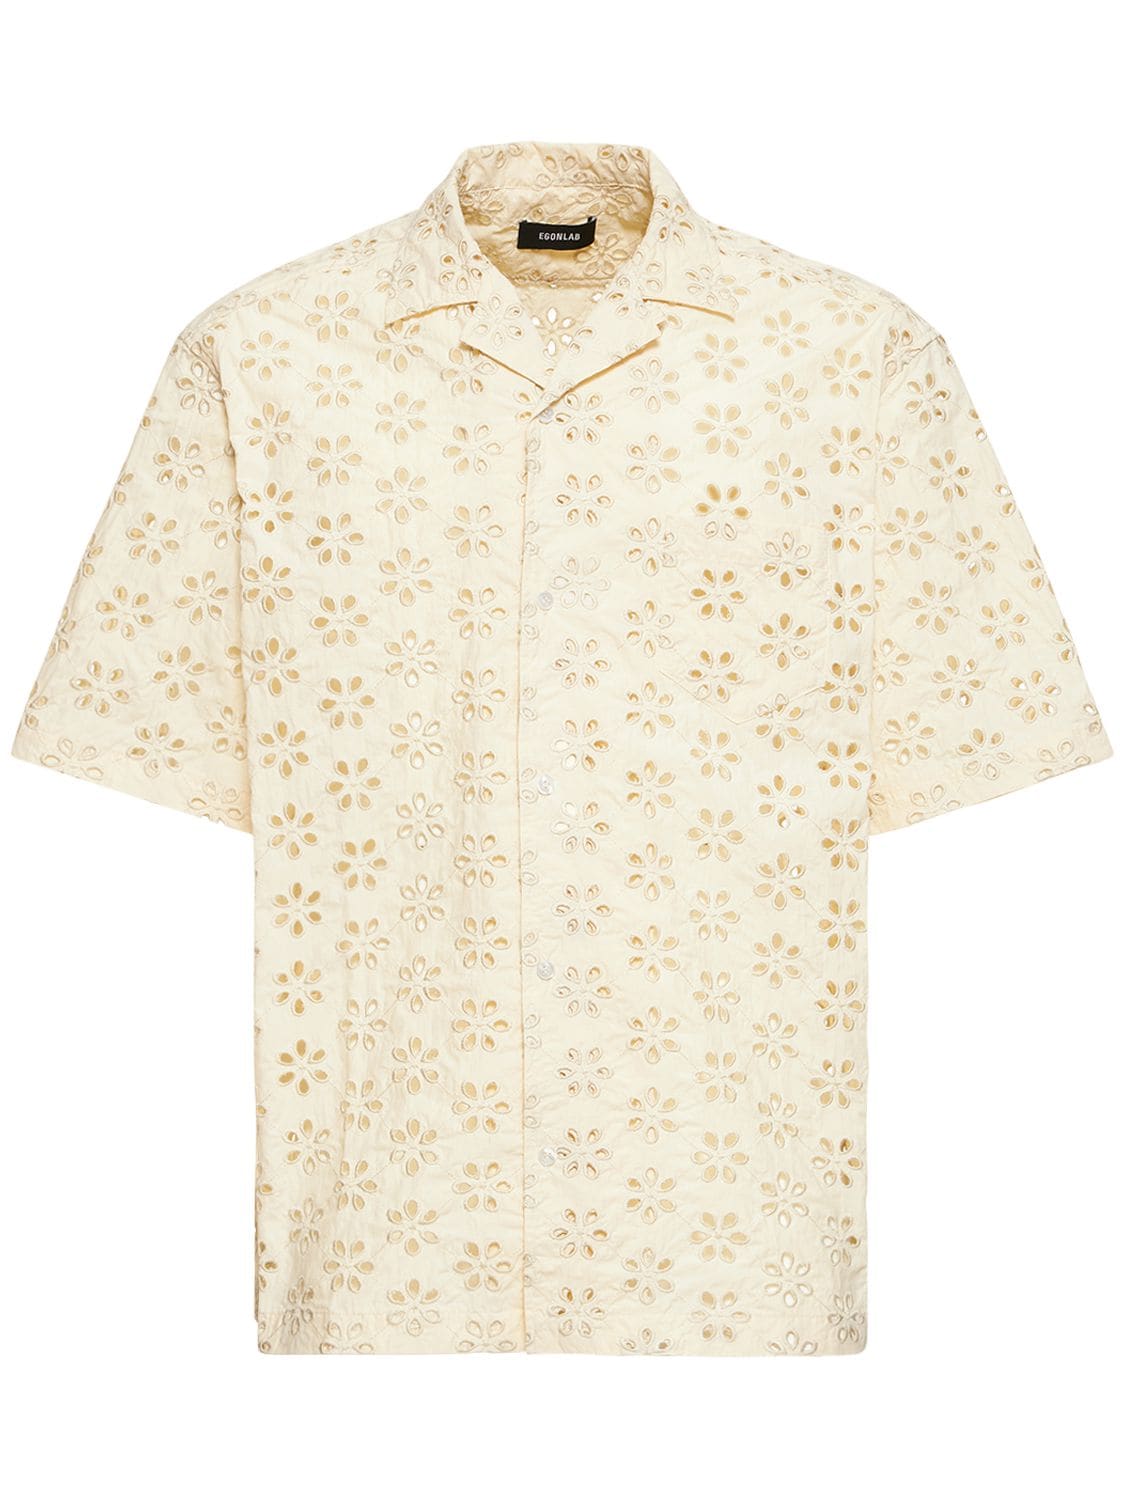 Egonlab Wonderland Summer Shirt In Patterned White